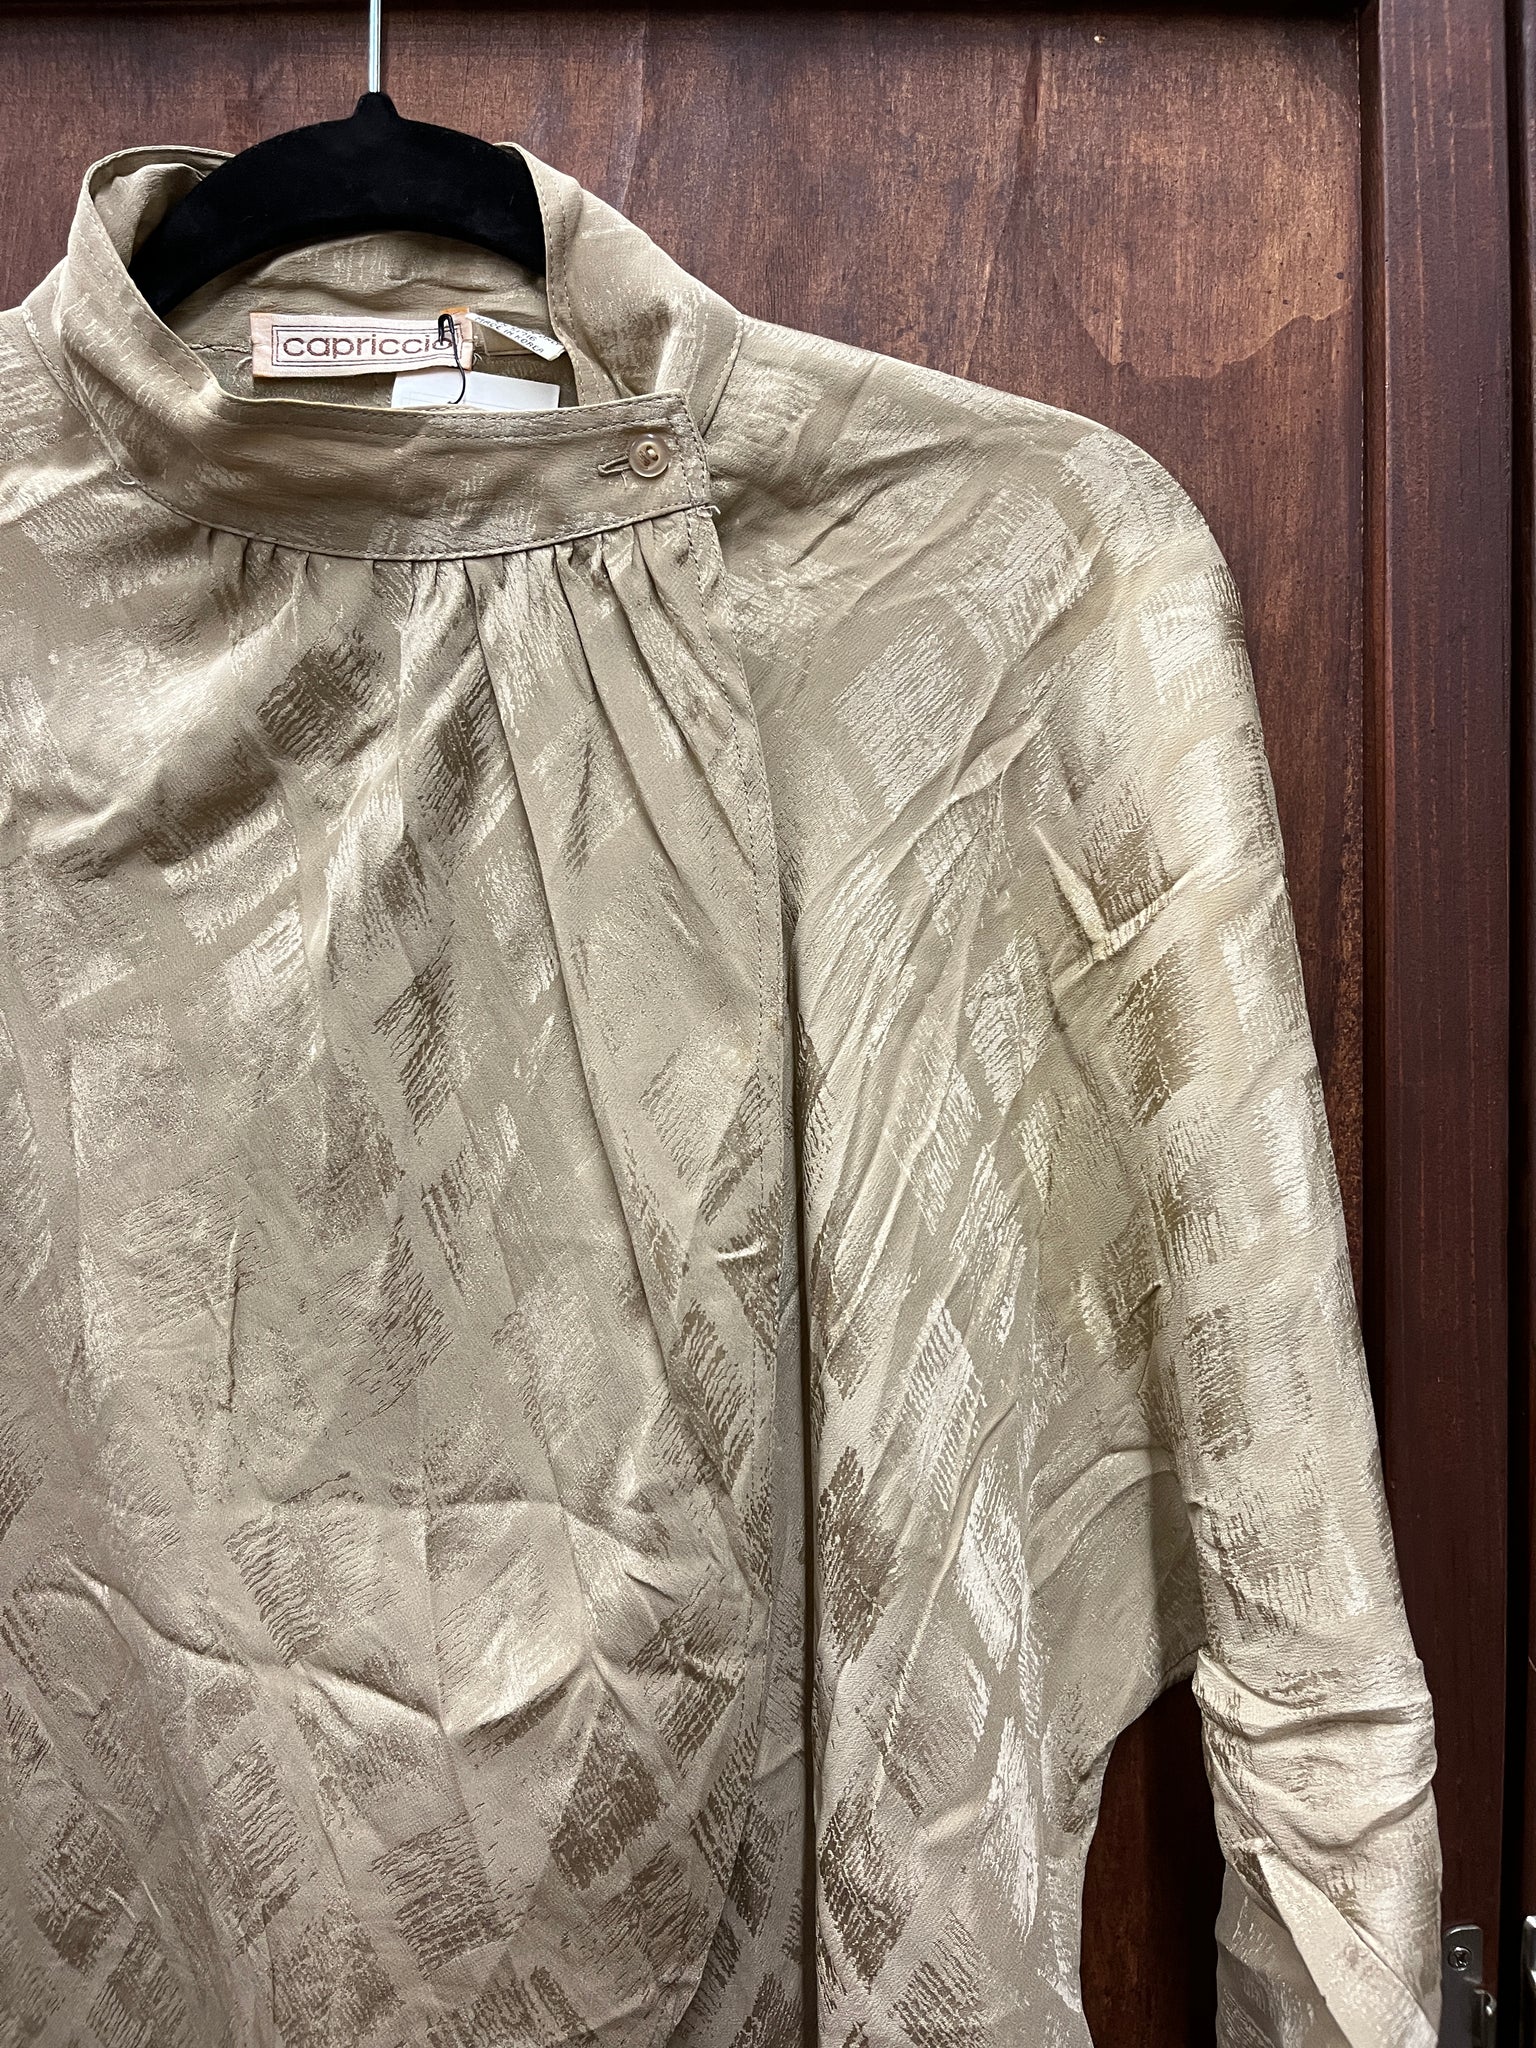 1970s TOP- Capriccio khaki silk jacquard top wrap neck